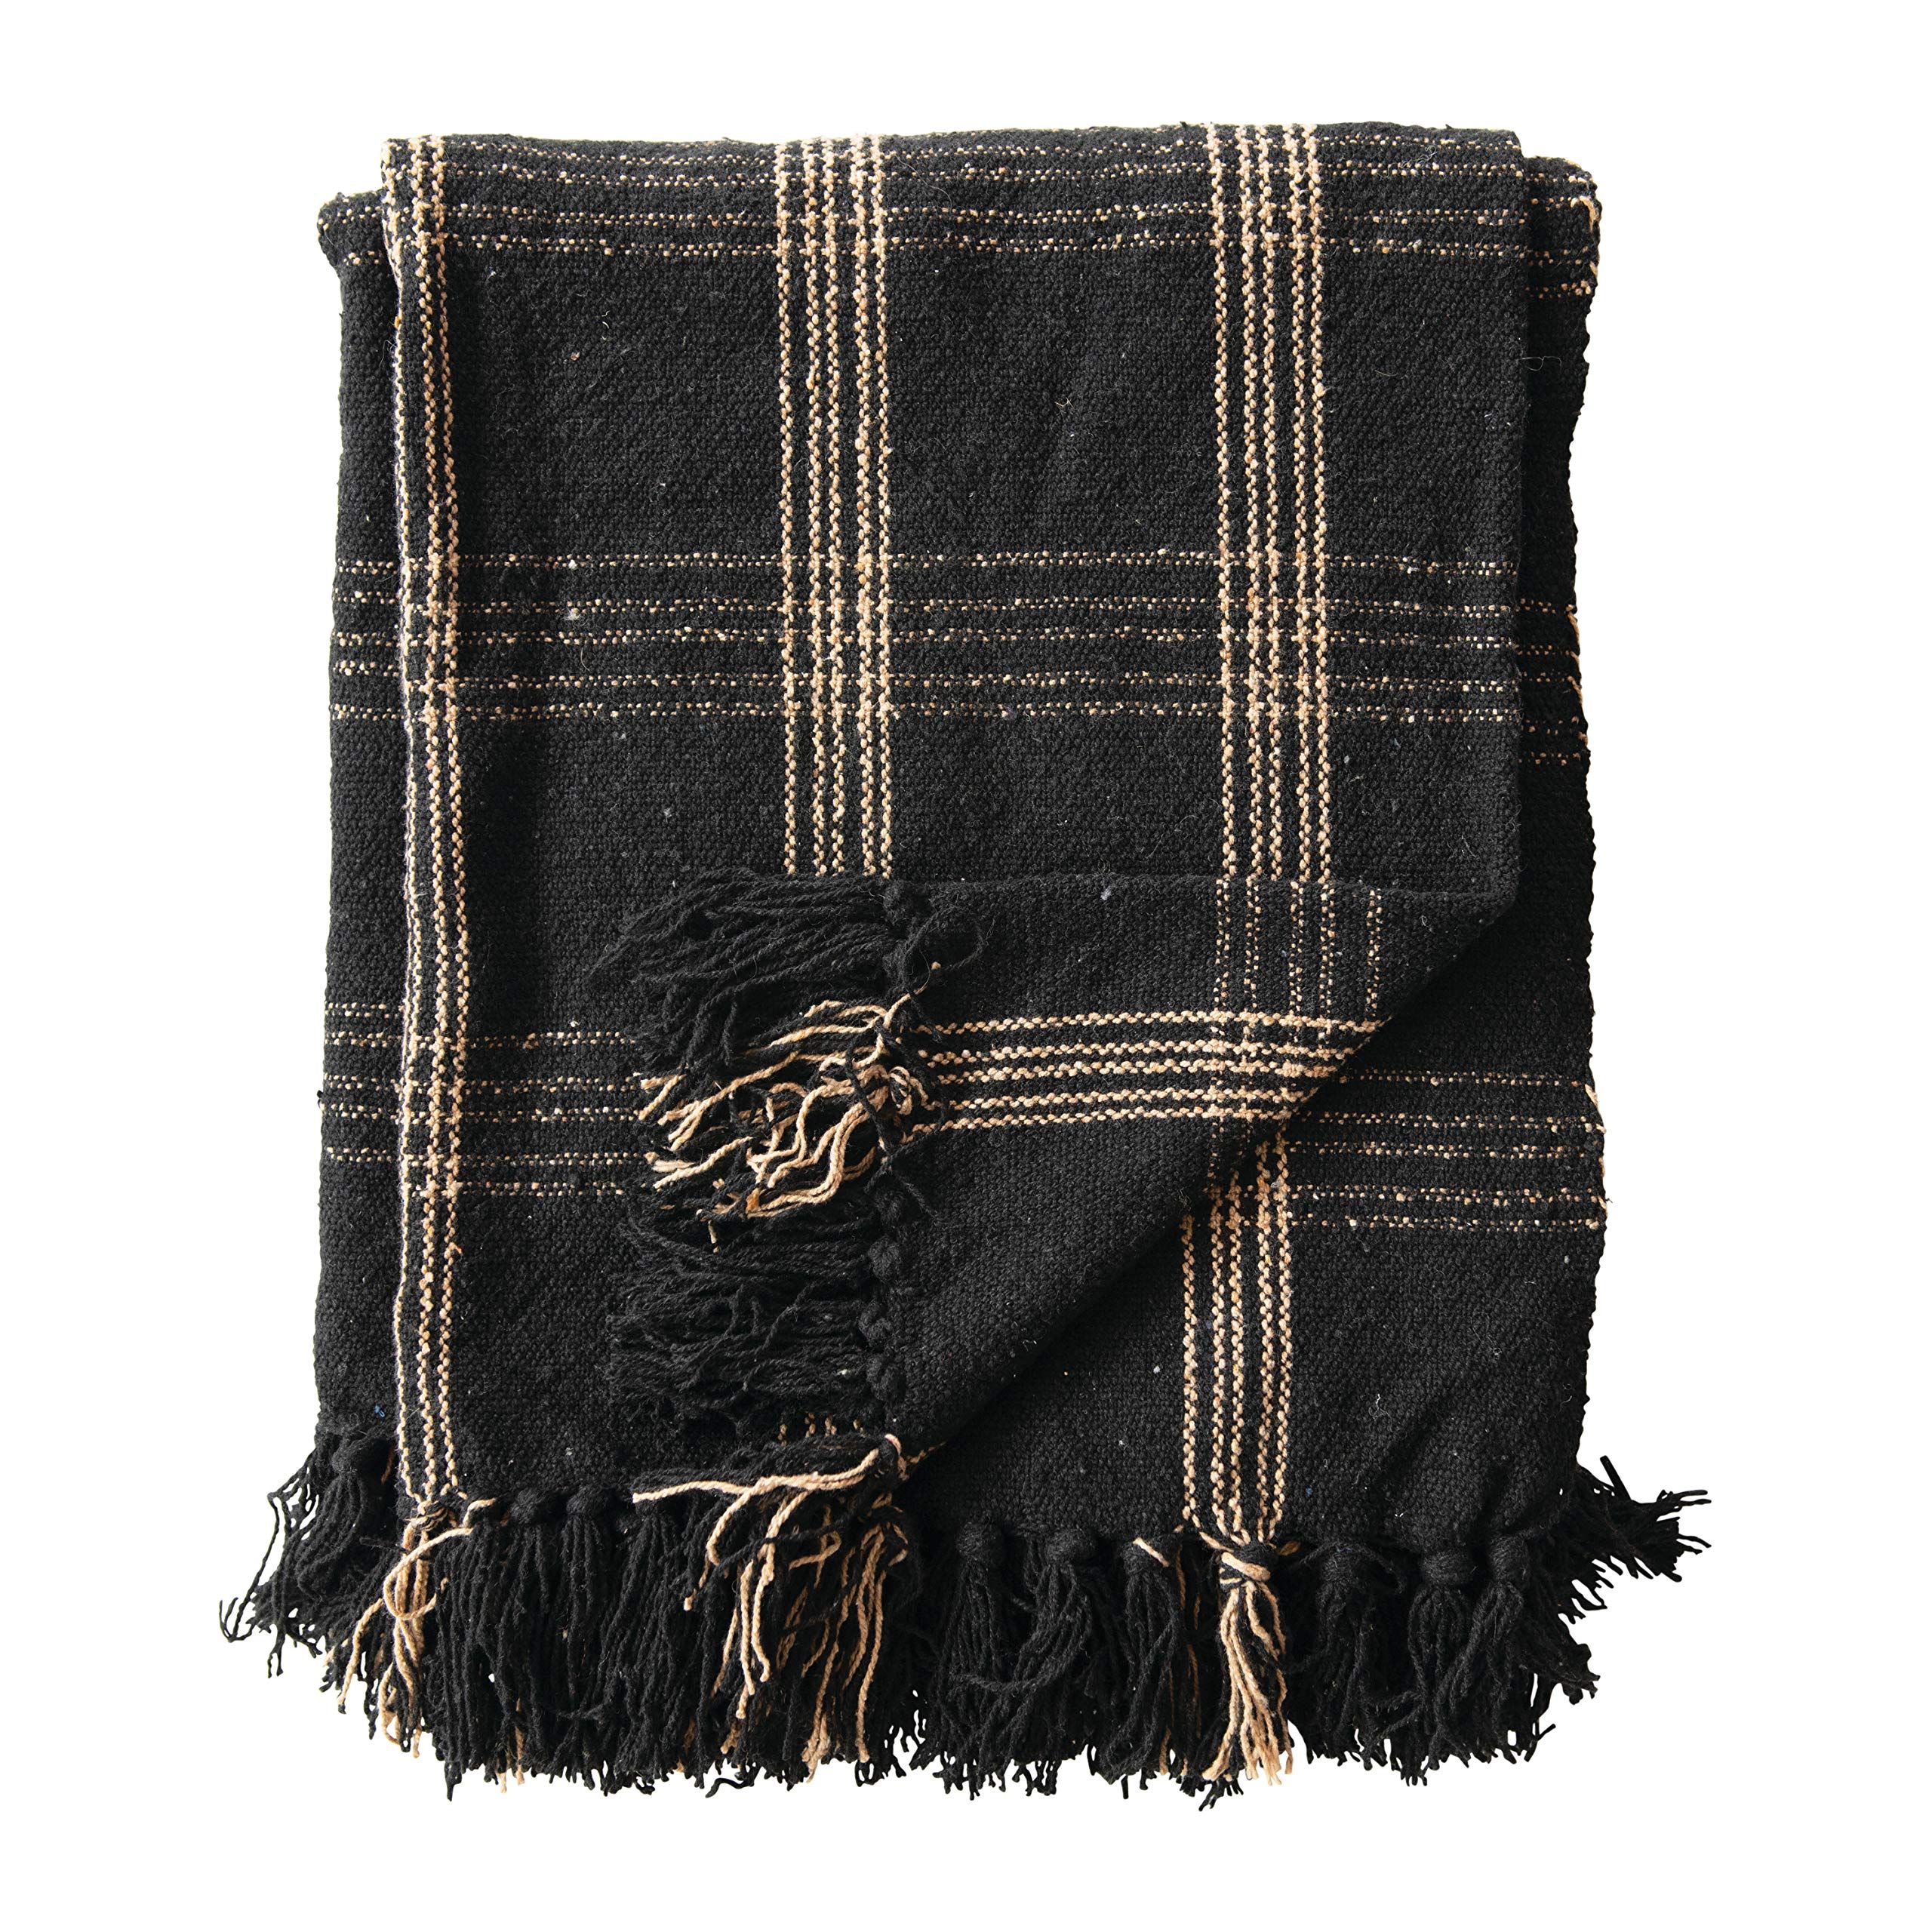 Creative Co-op DF3609 Plaid Black & Tan Fringed Woven Cotton Blend Throw, Black | Amazon (US)